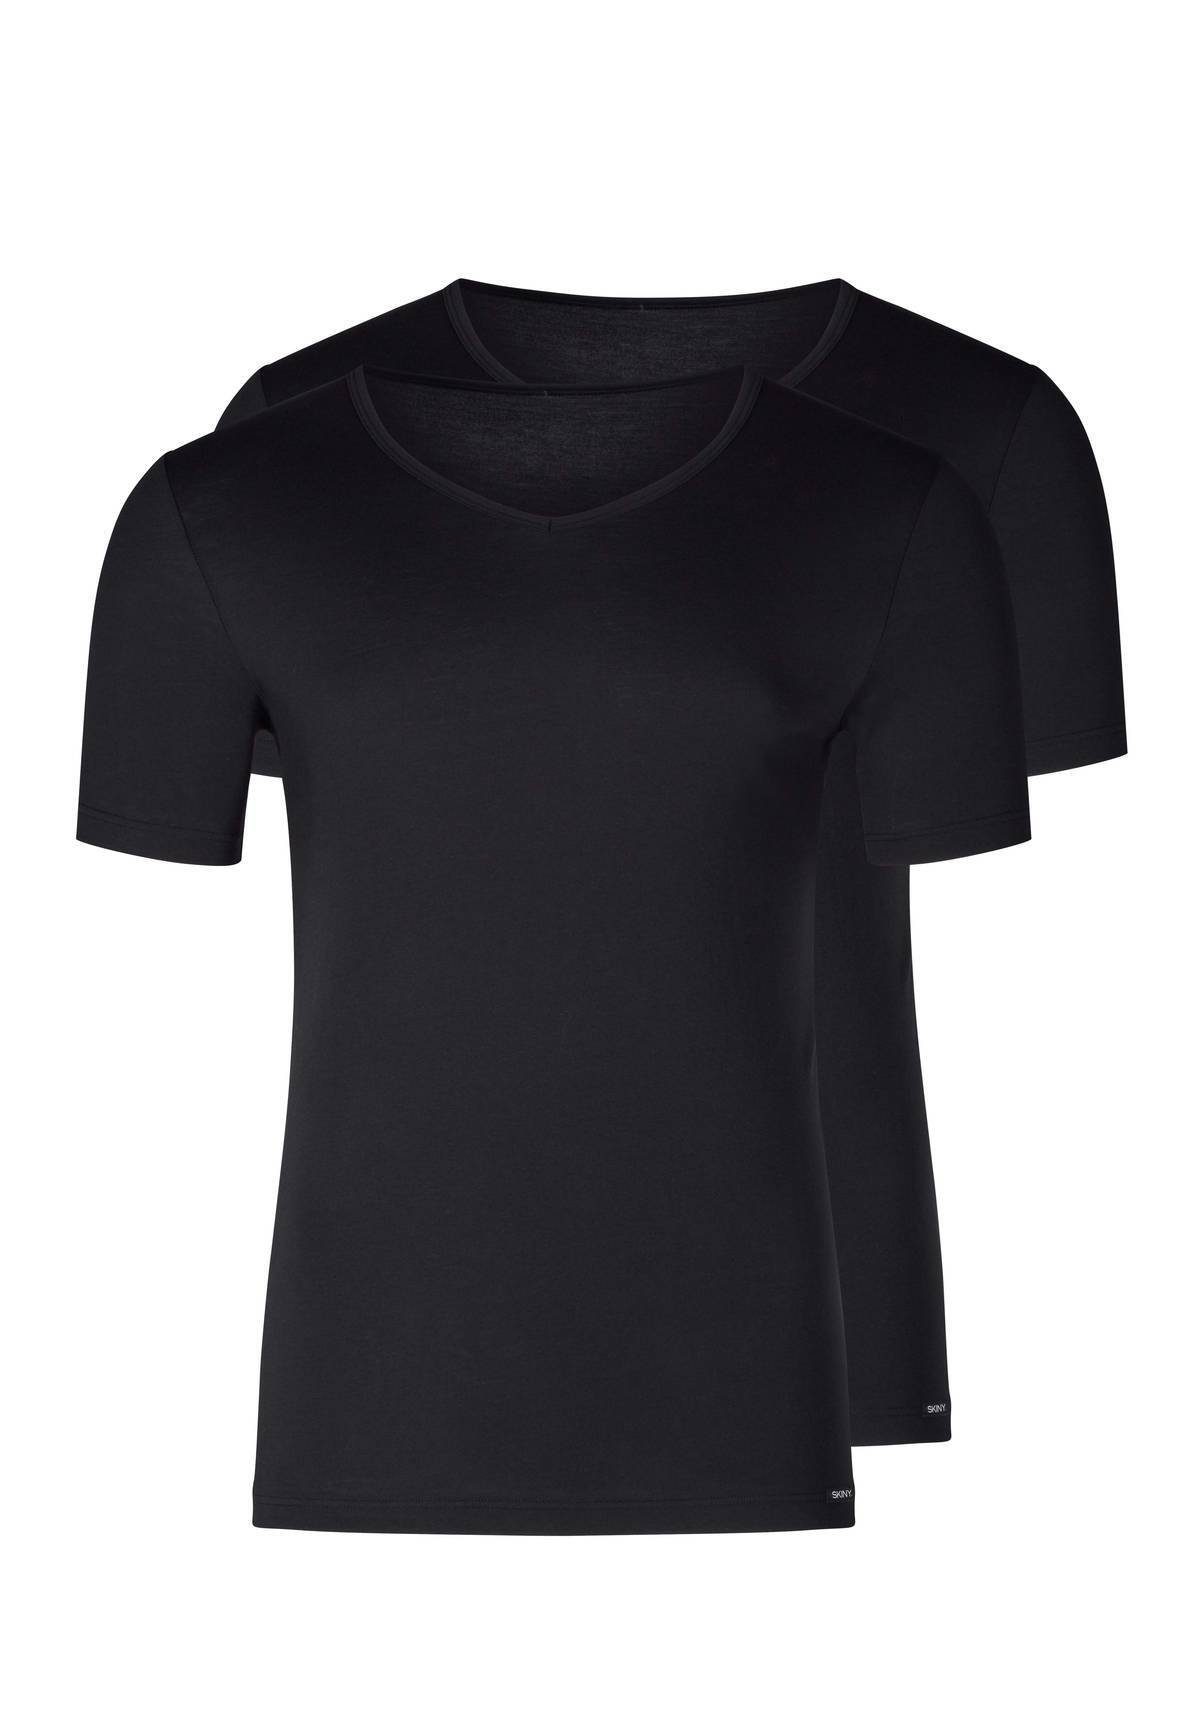 Skiny Unterhemd Herren T-Shirt, 2er Pack - Unterhemd, Halbarm Schwarz